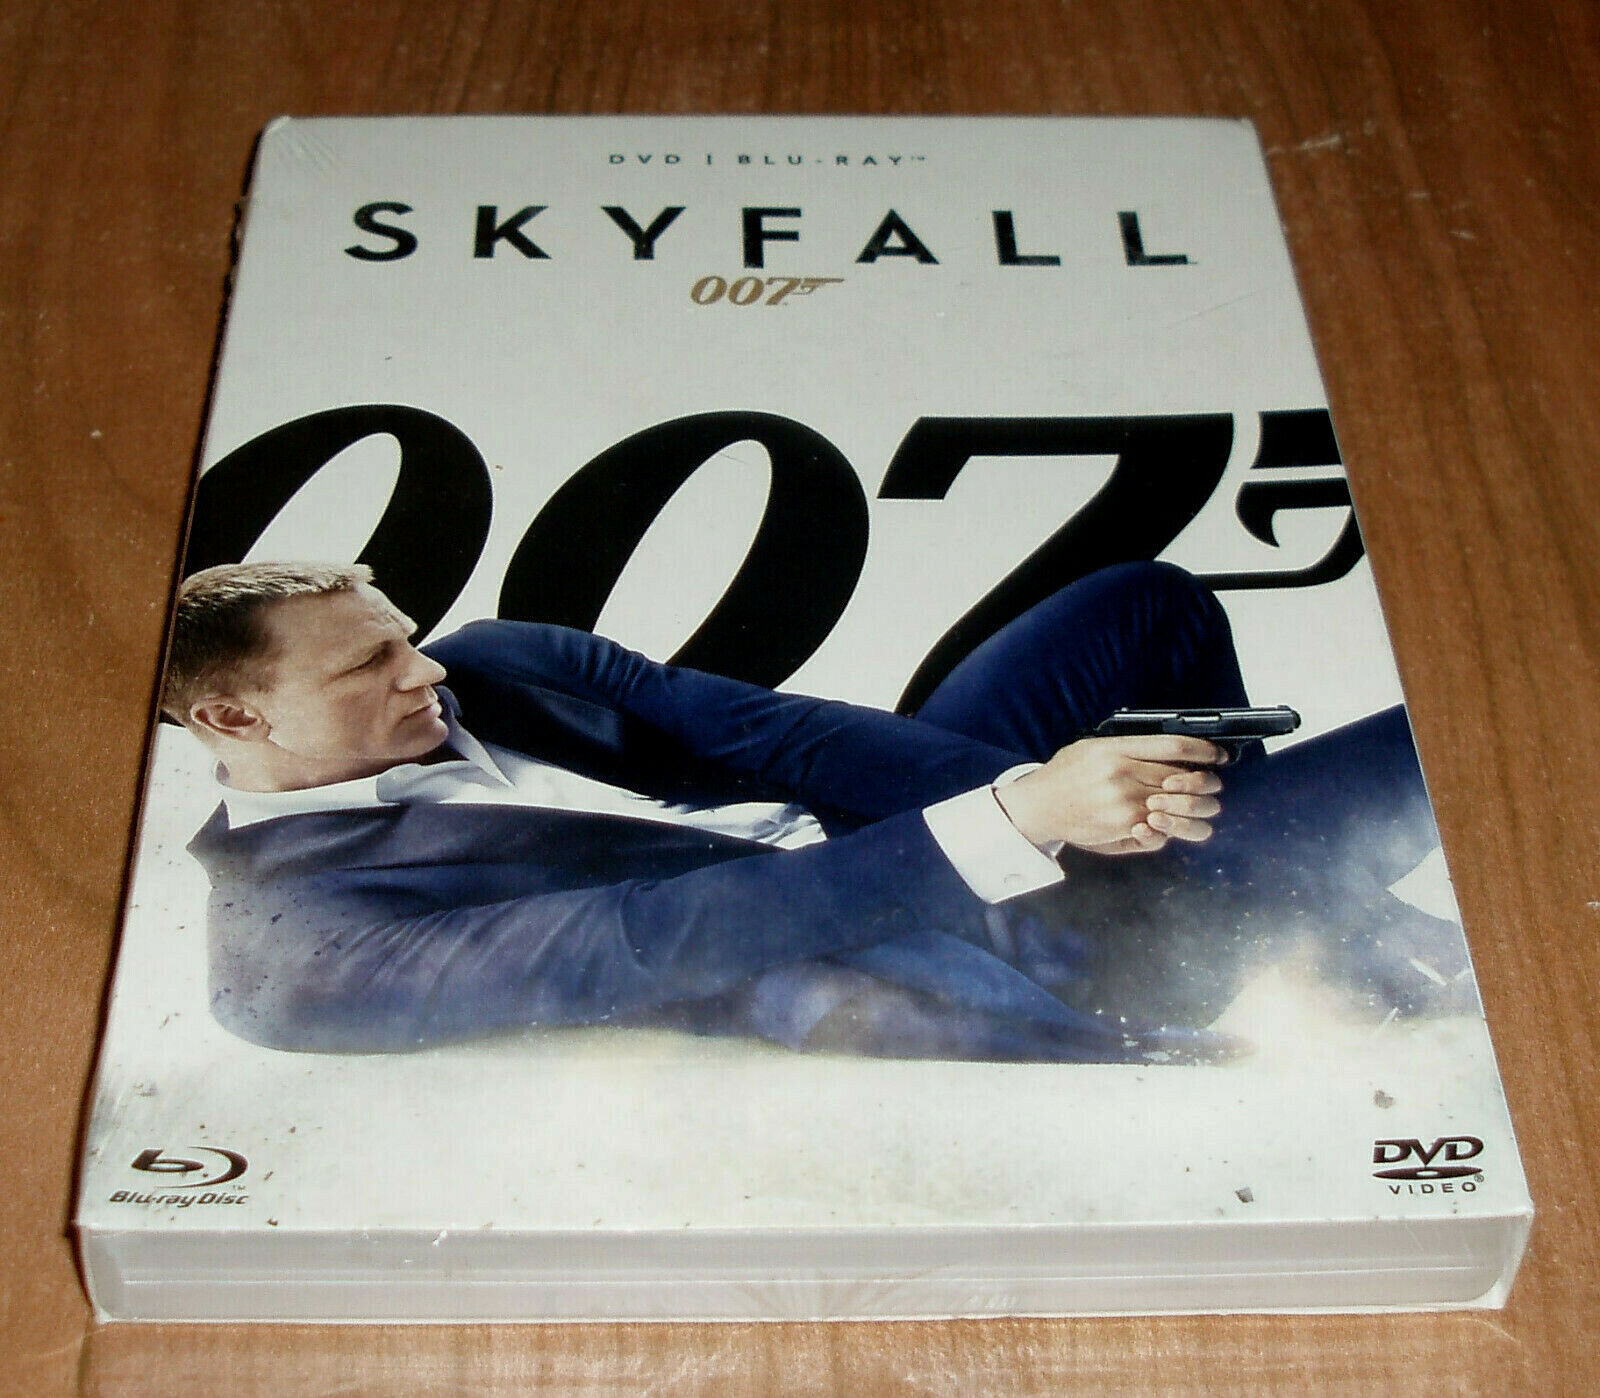 SKYFALL BLU-RAY+DVD NUEVO JAMES BOND 007 SLIPCOVER ACCION (SIN ABRIR) R2